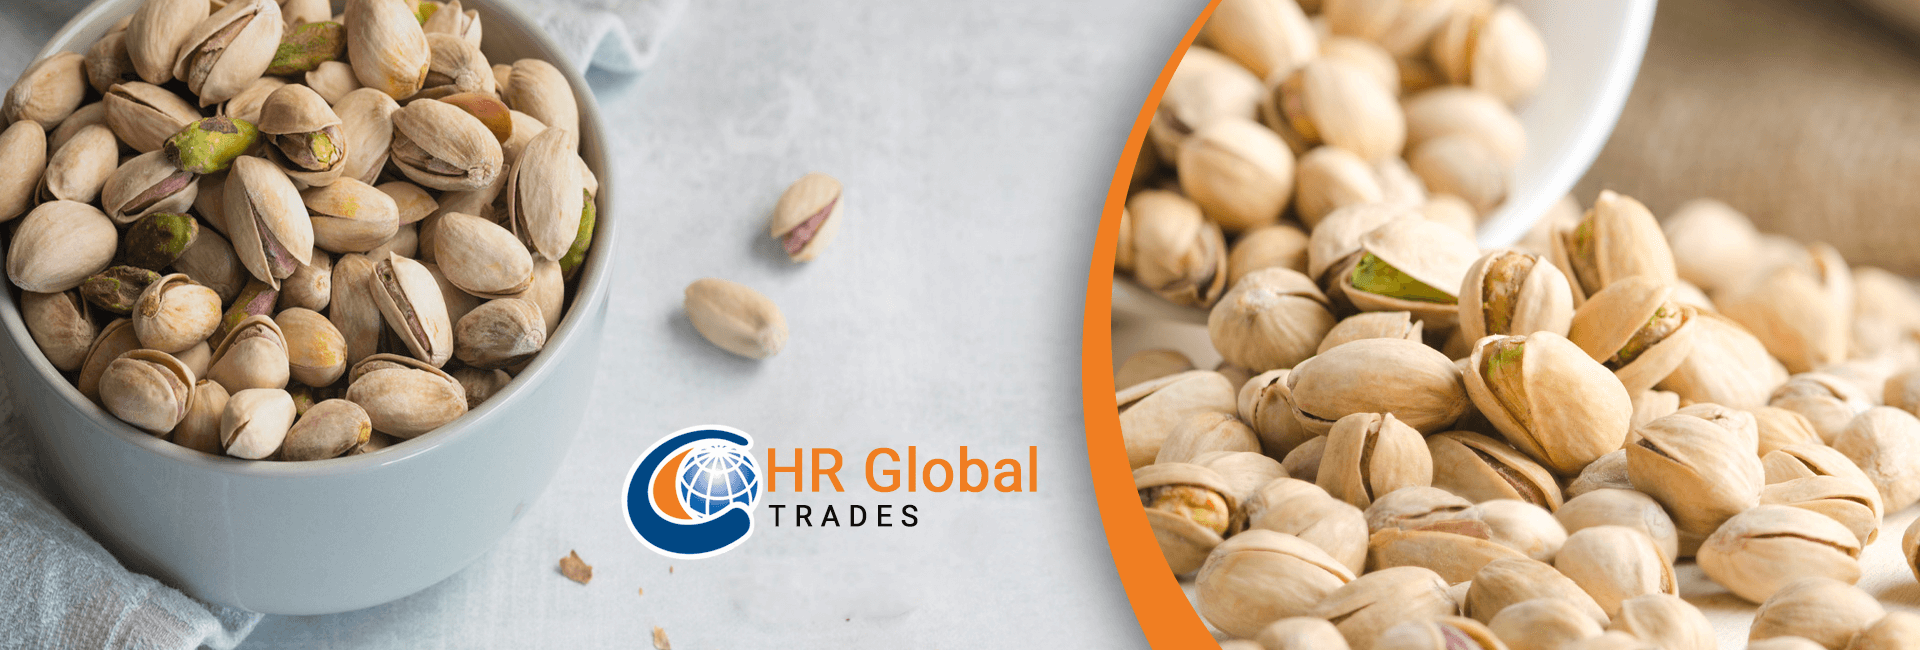 HR Global Trades